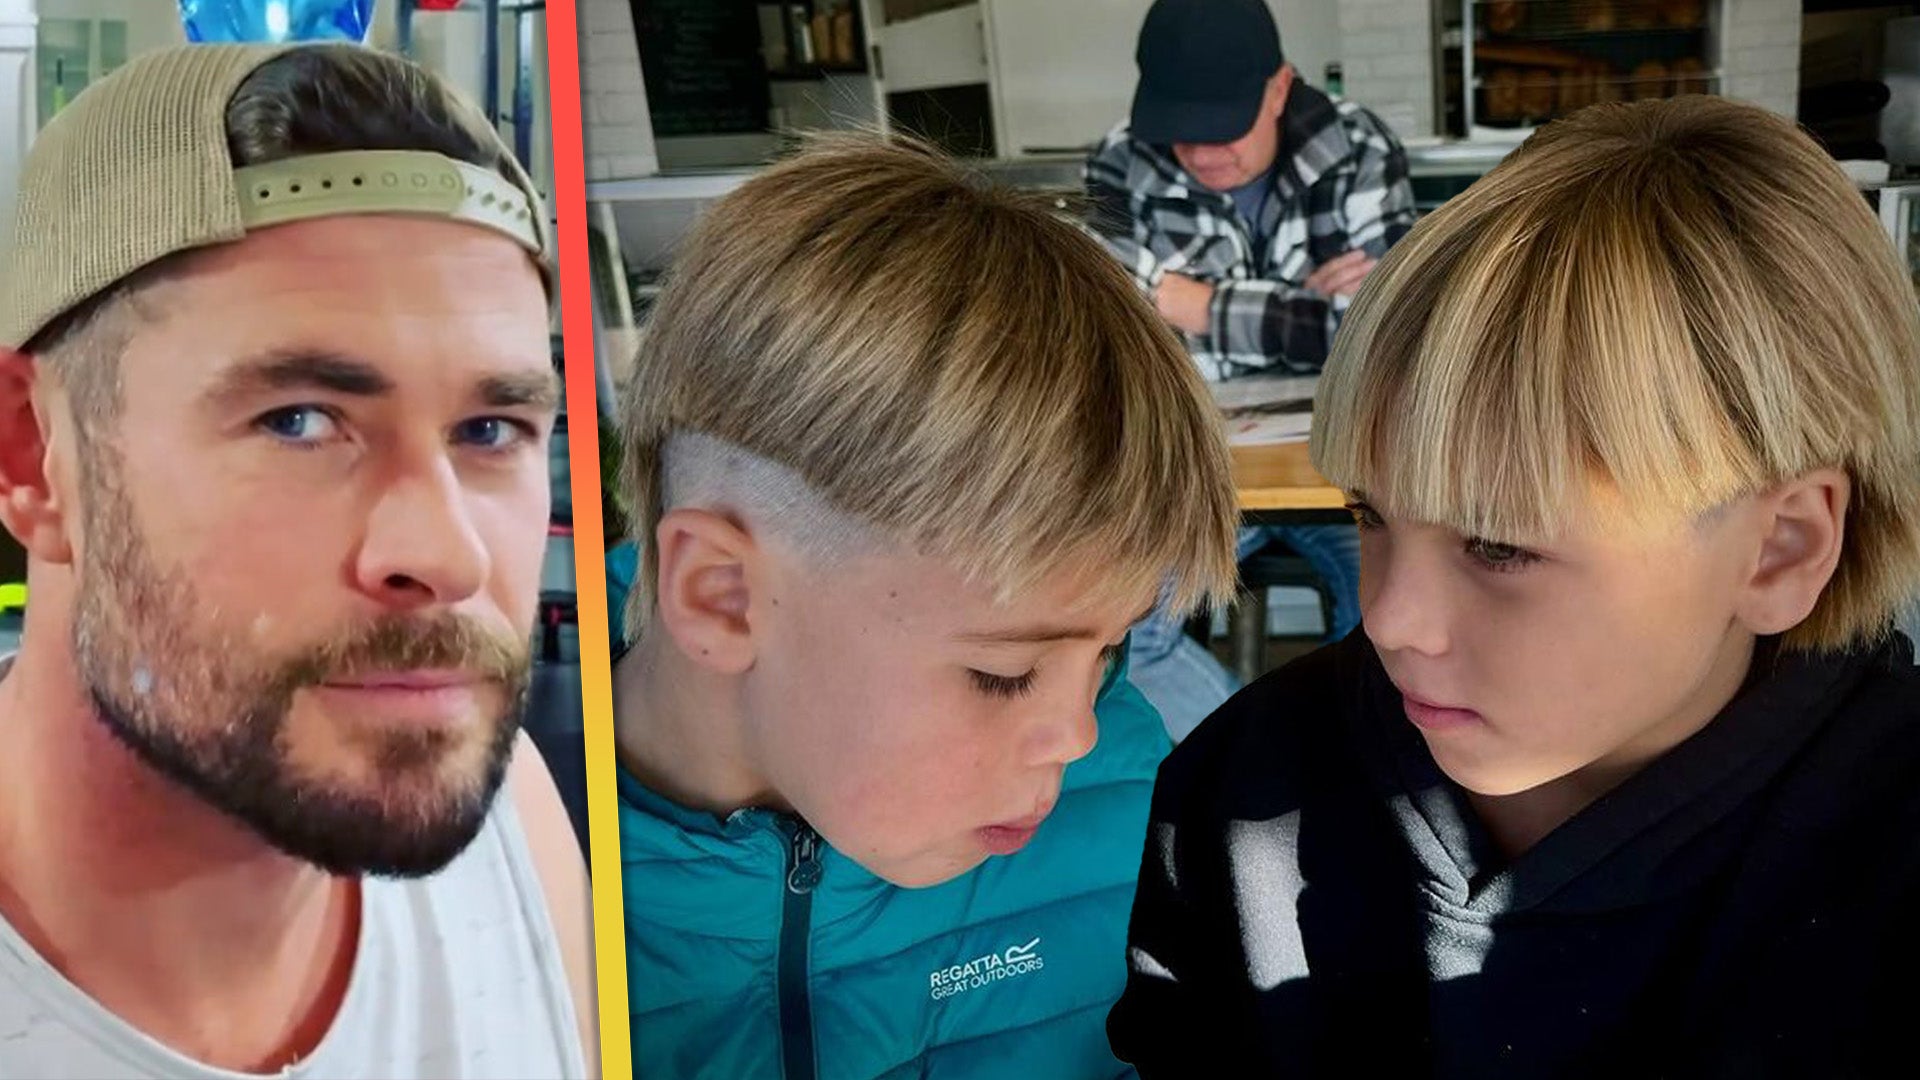 Chris Hemsworth Botches Sons’ Haircuts